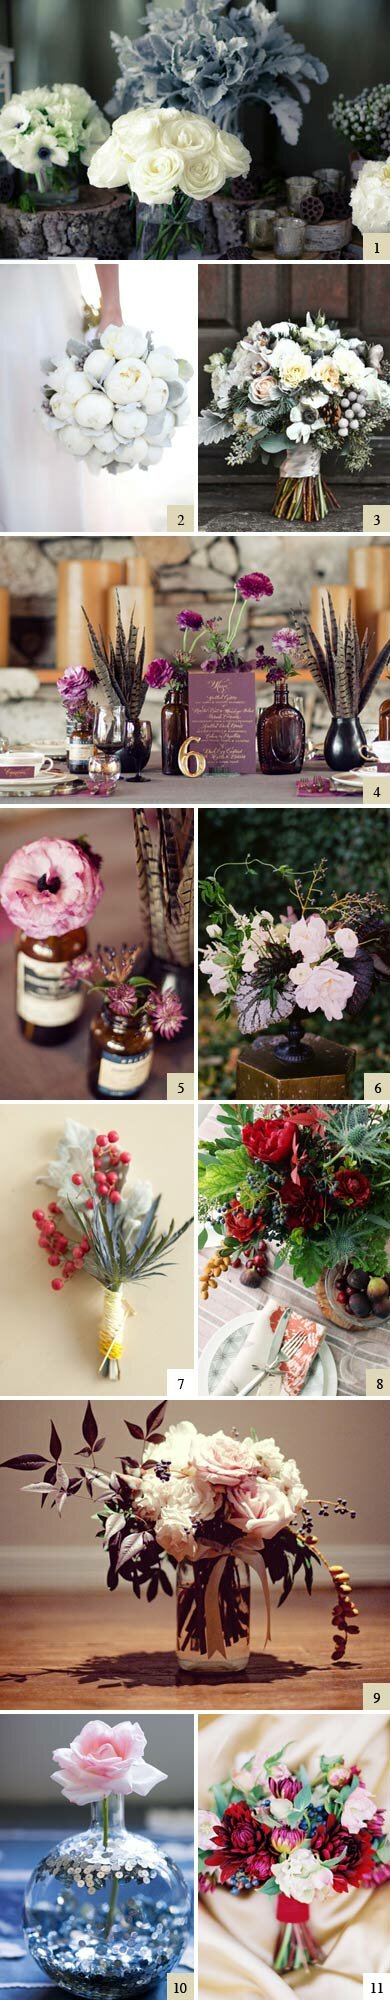 Winter wedding flower ideas